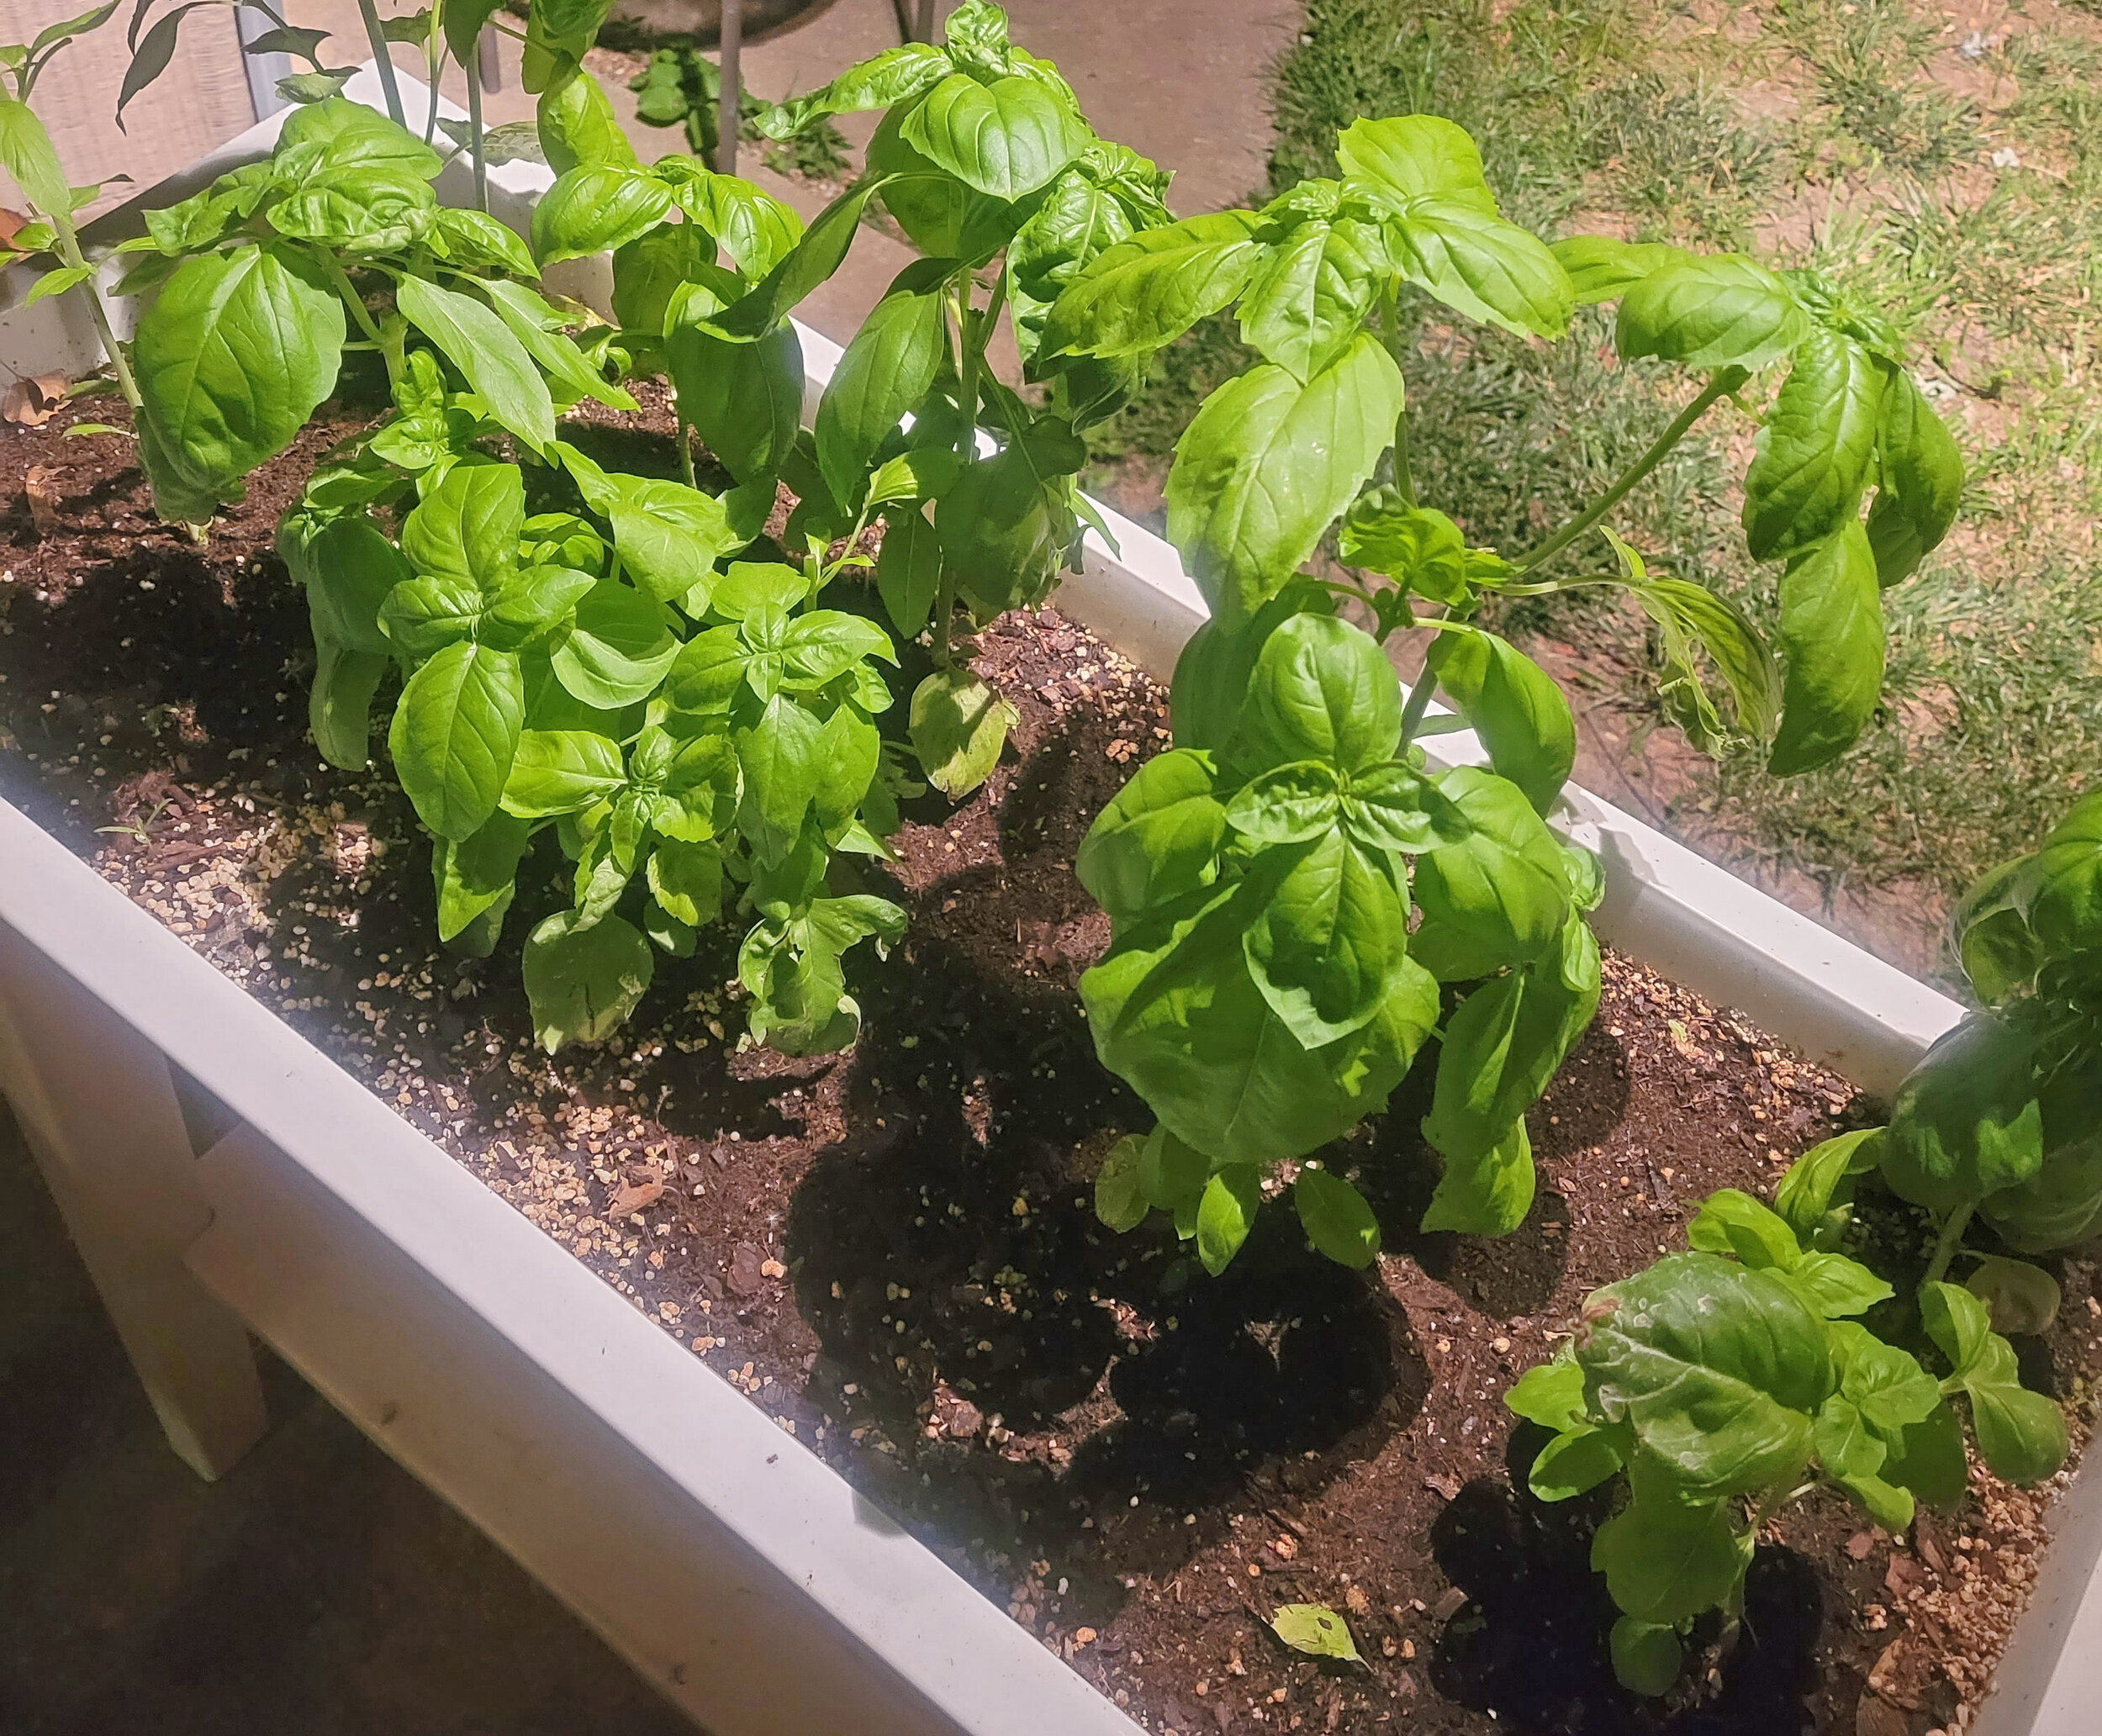 Transplanted Basil Plants Outdoors